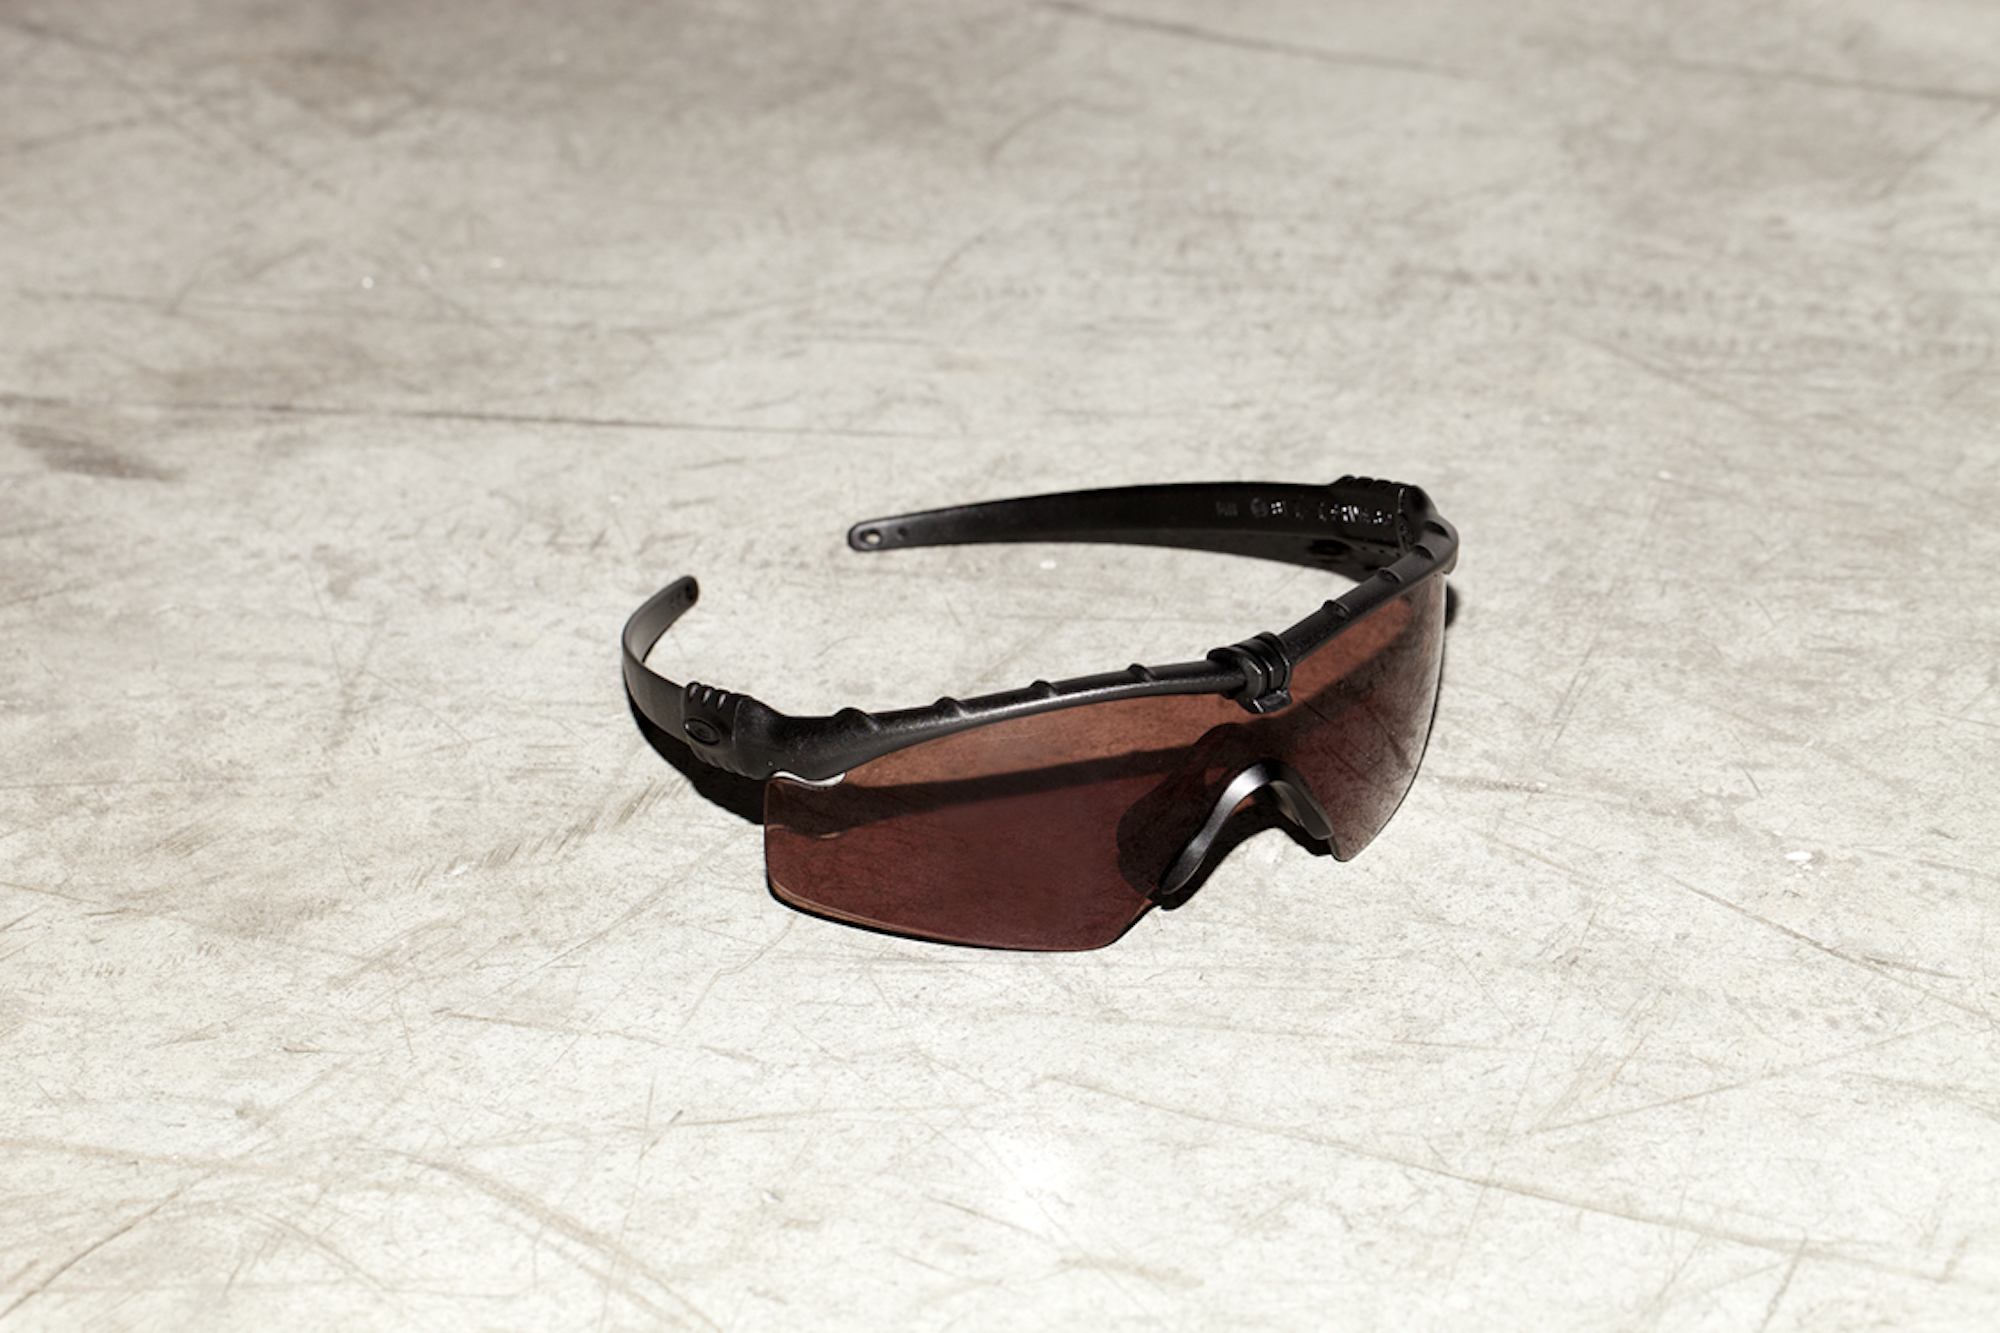  sun and sand worship (detail) 2016 Oakley Standard Issue 3.0 Ballistic M Frame sunglasses (PRIZM TR22 lenses), ceramic tile, wood, plasti dip 20 x 4 x 39 cm 